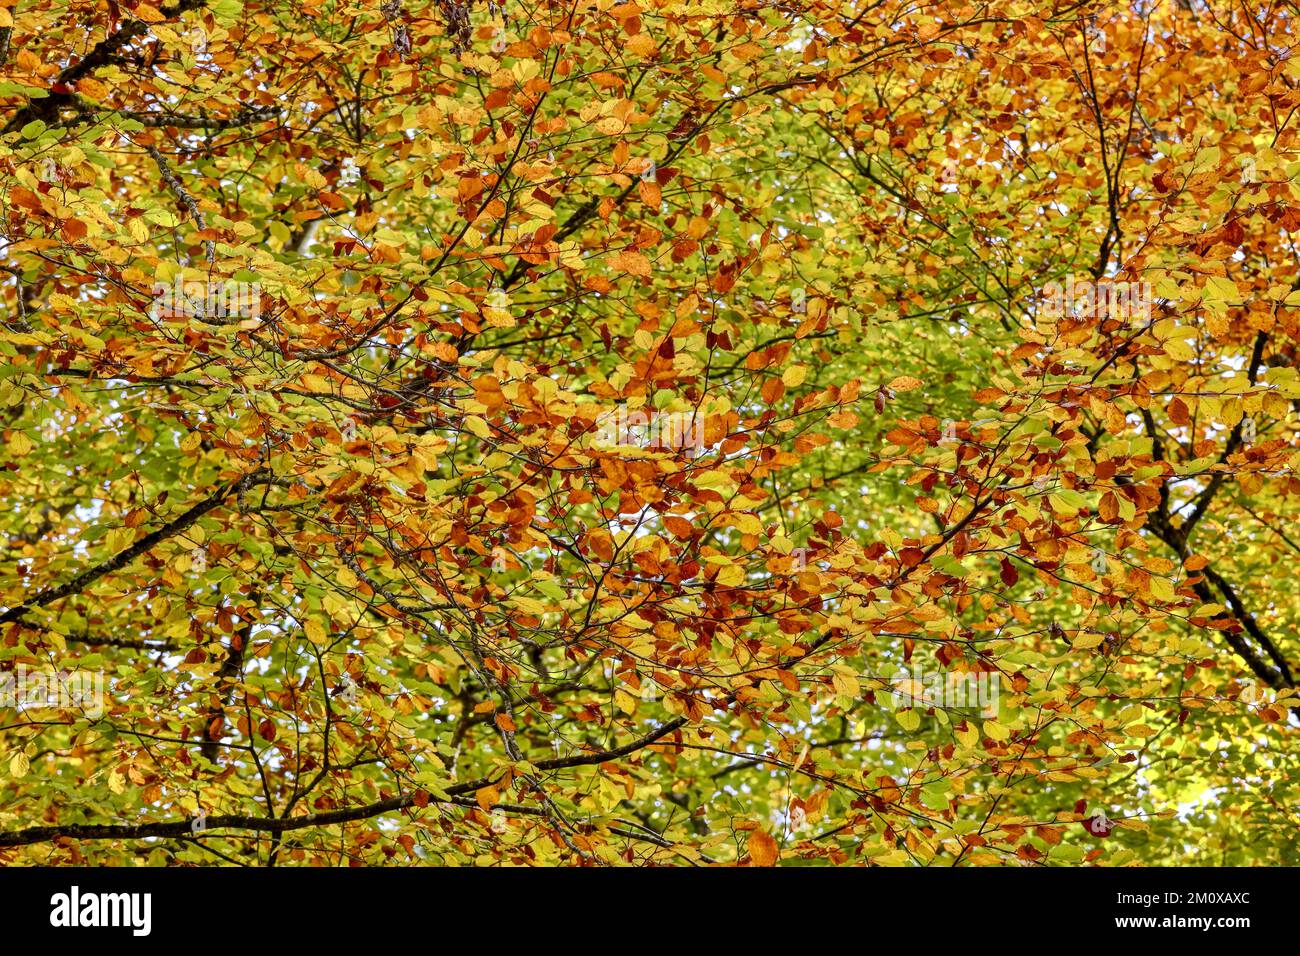 Coloured leaves of the simon poplar (Populus simonii) in autumn on branches, autumn foliage, Upper Bavaria, Bavaria, Germany, Europe Stock Photo